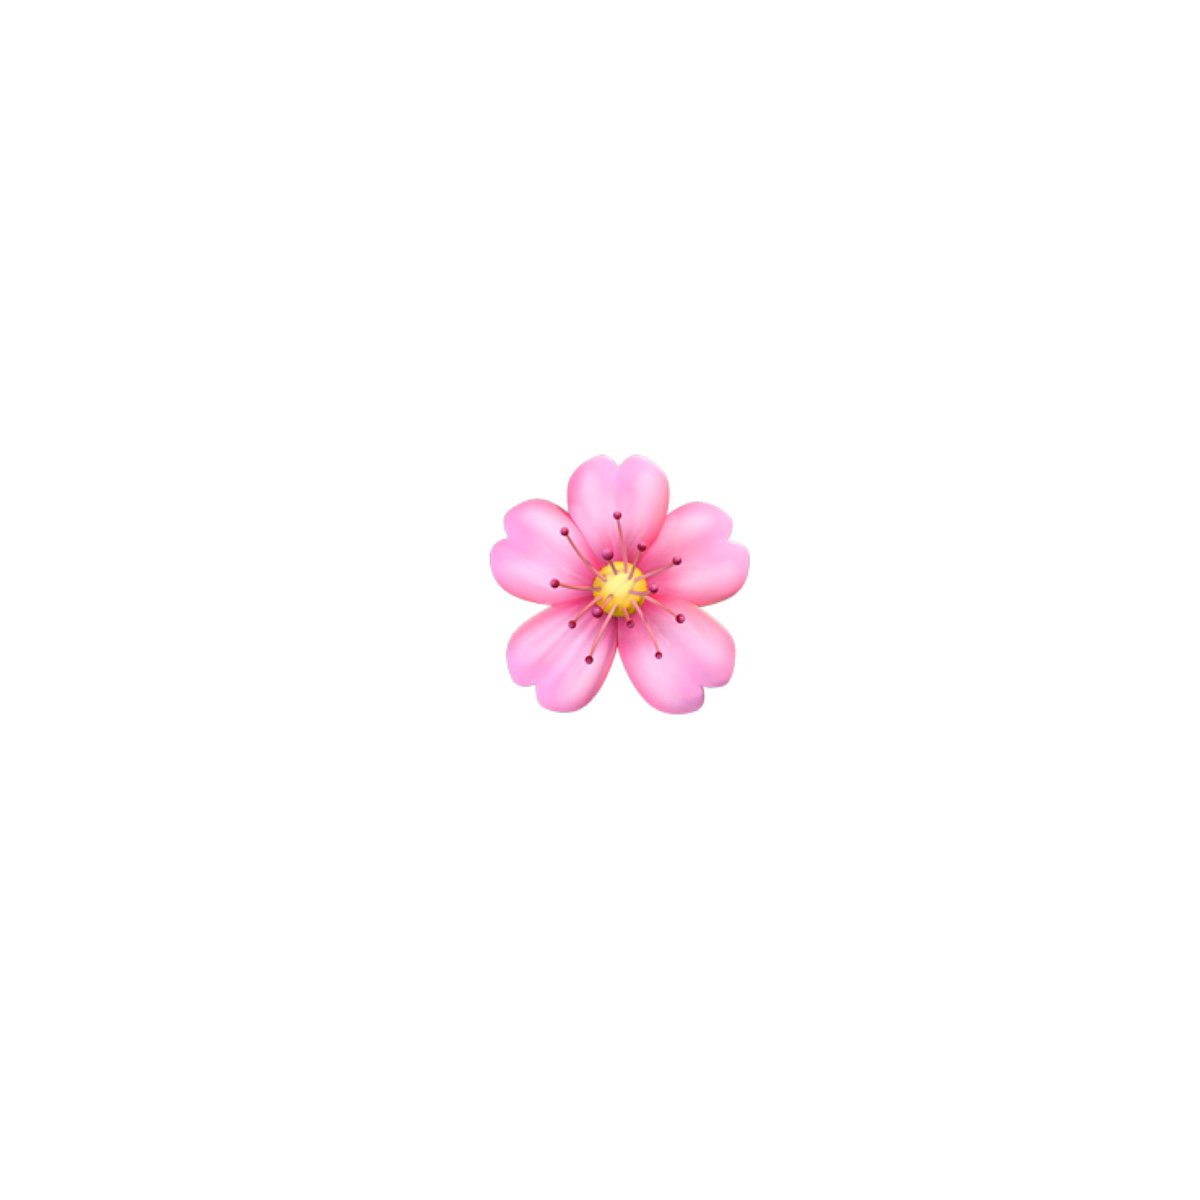 no humans still life transparent background flower simple background pink flower cherry blossoms  illustration images